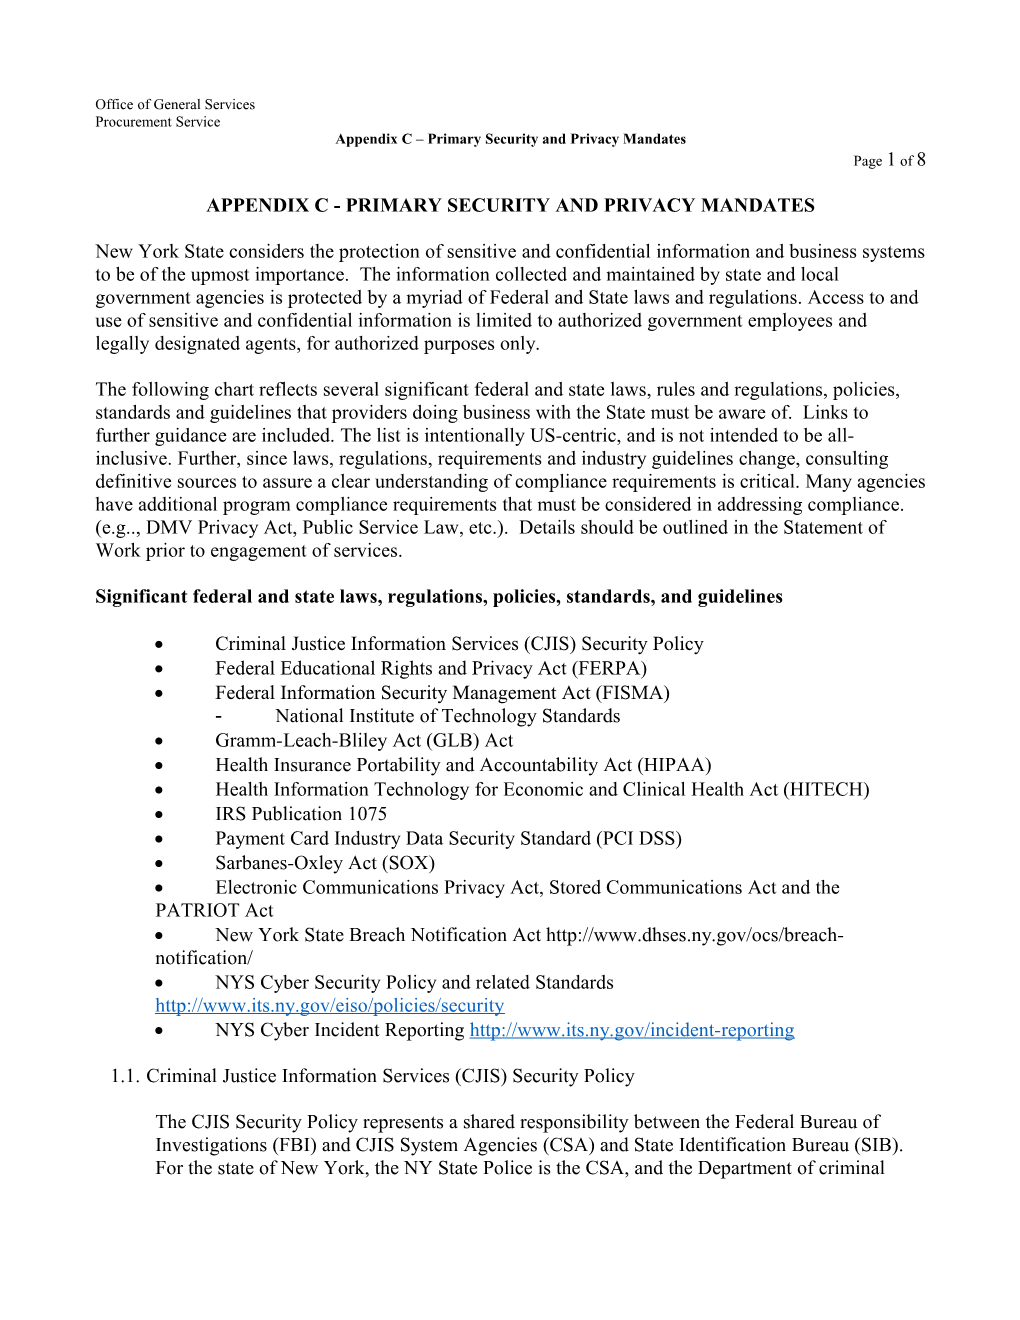 Appendix C - Primary Security and Privacy Mandates